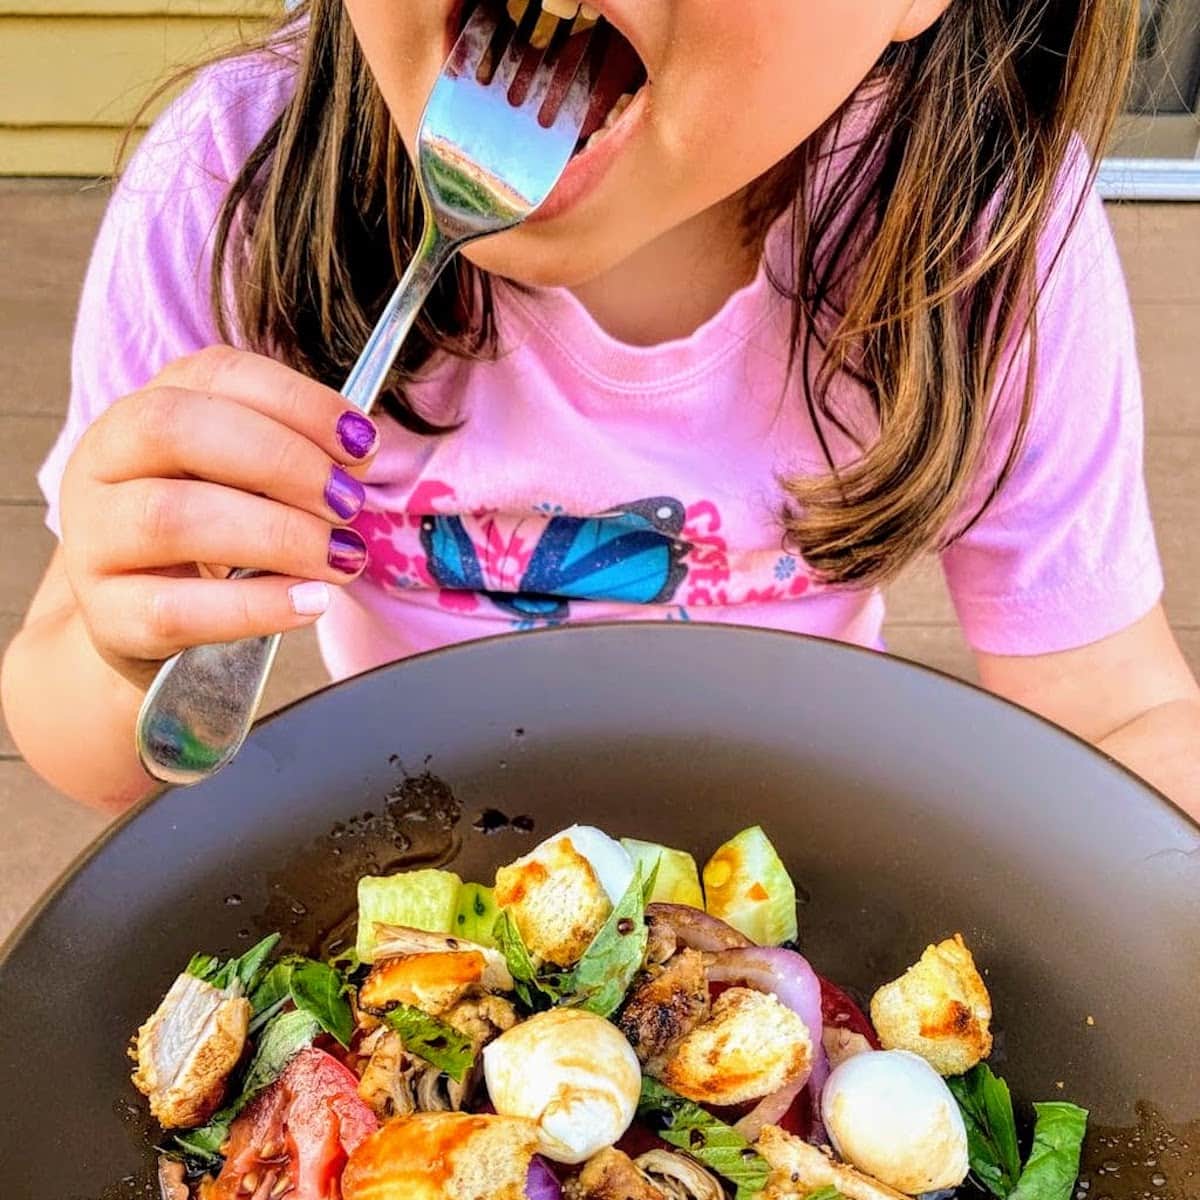 child eating salad